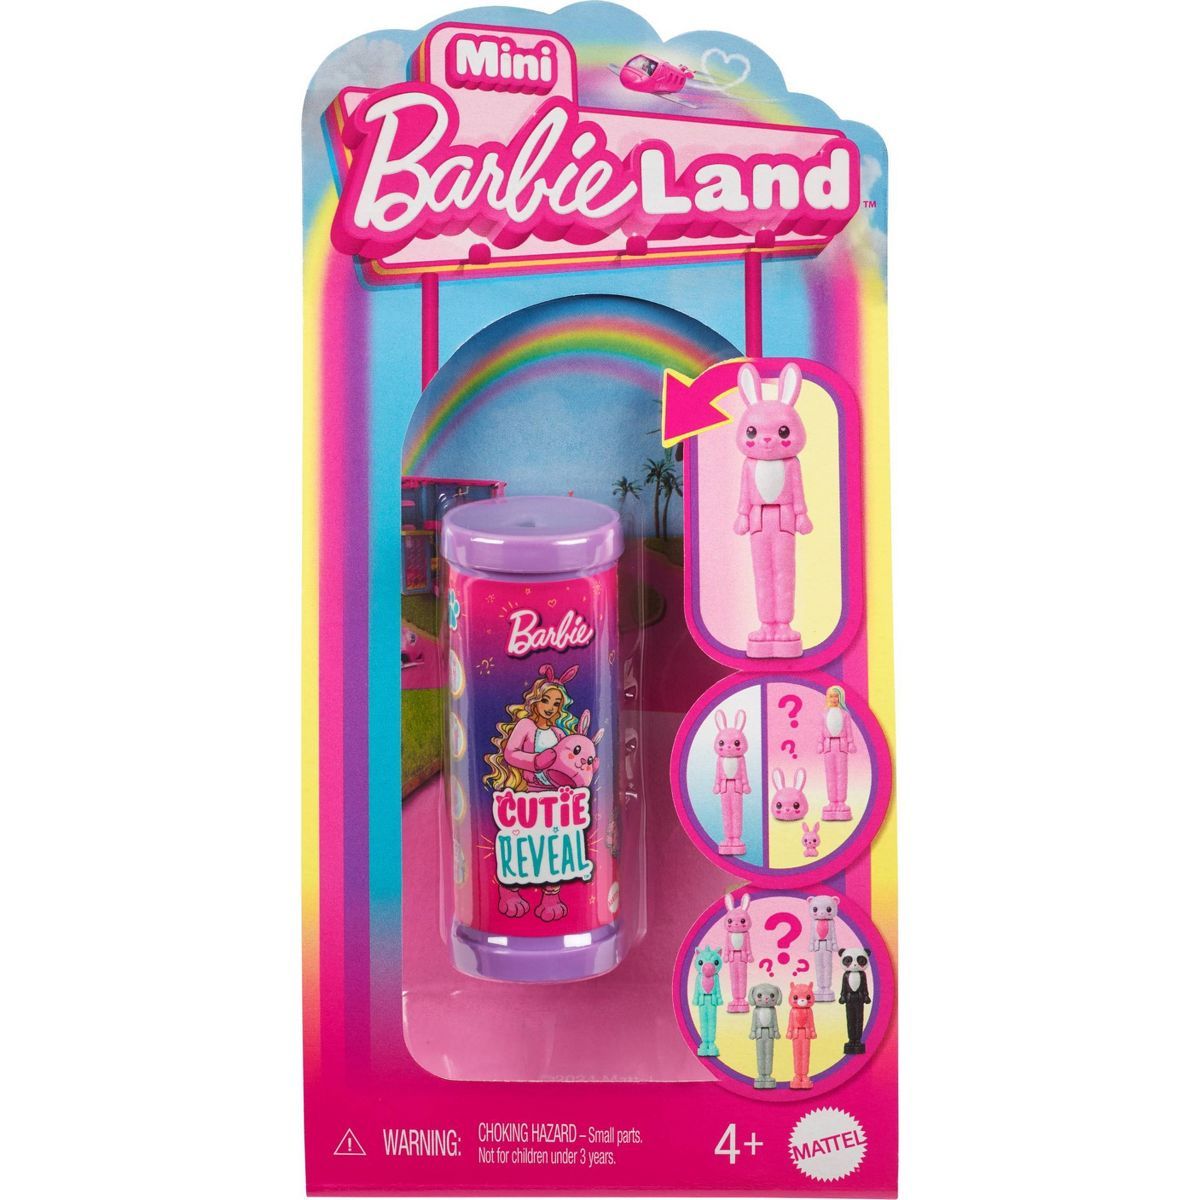 Barbie Land 6" Mini Cutie Reveal Doll | Target